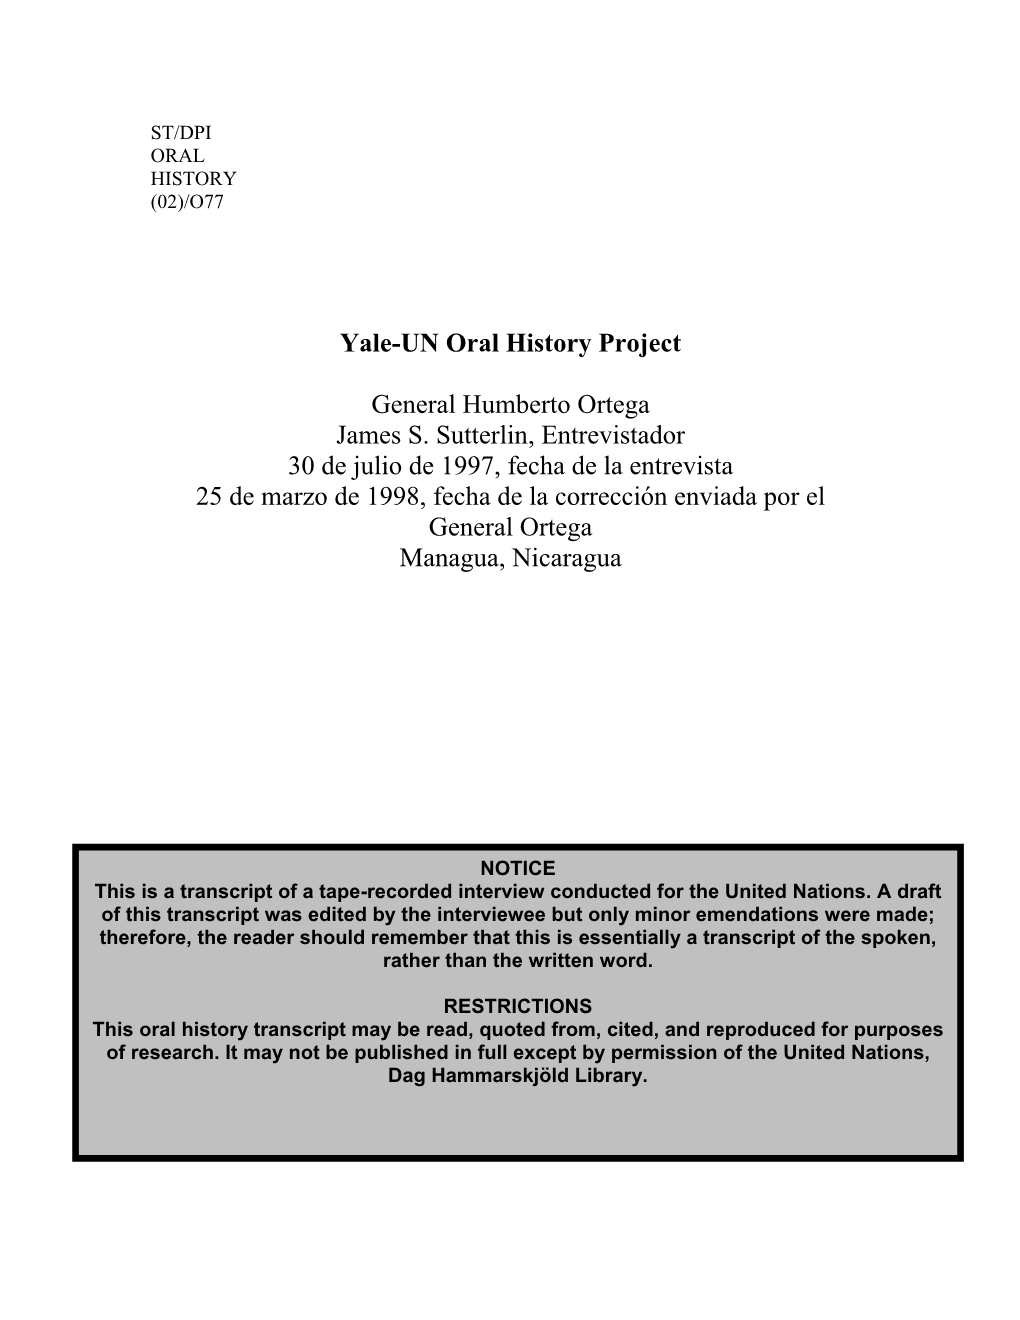 Yale-UN Oral History Project General Humberto Ortega James S. Sutterlin